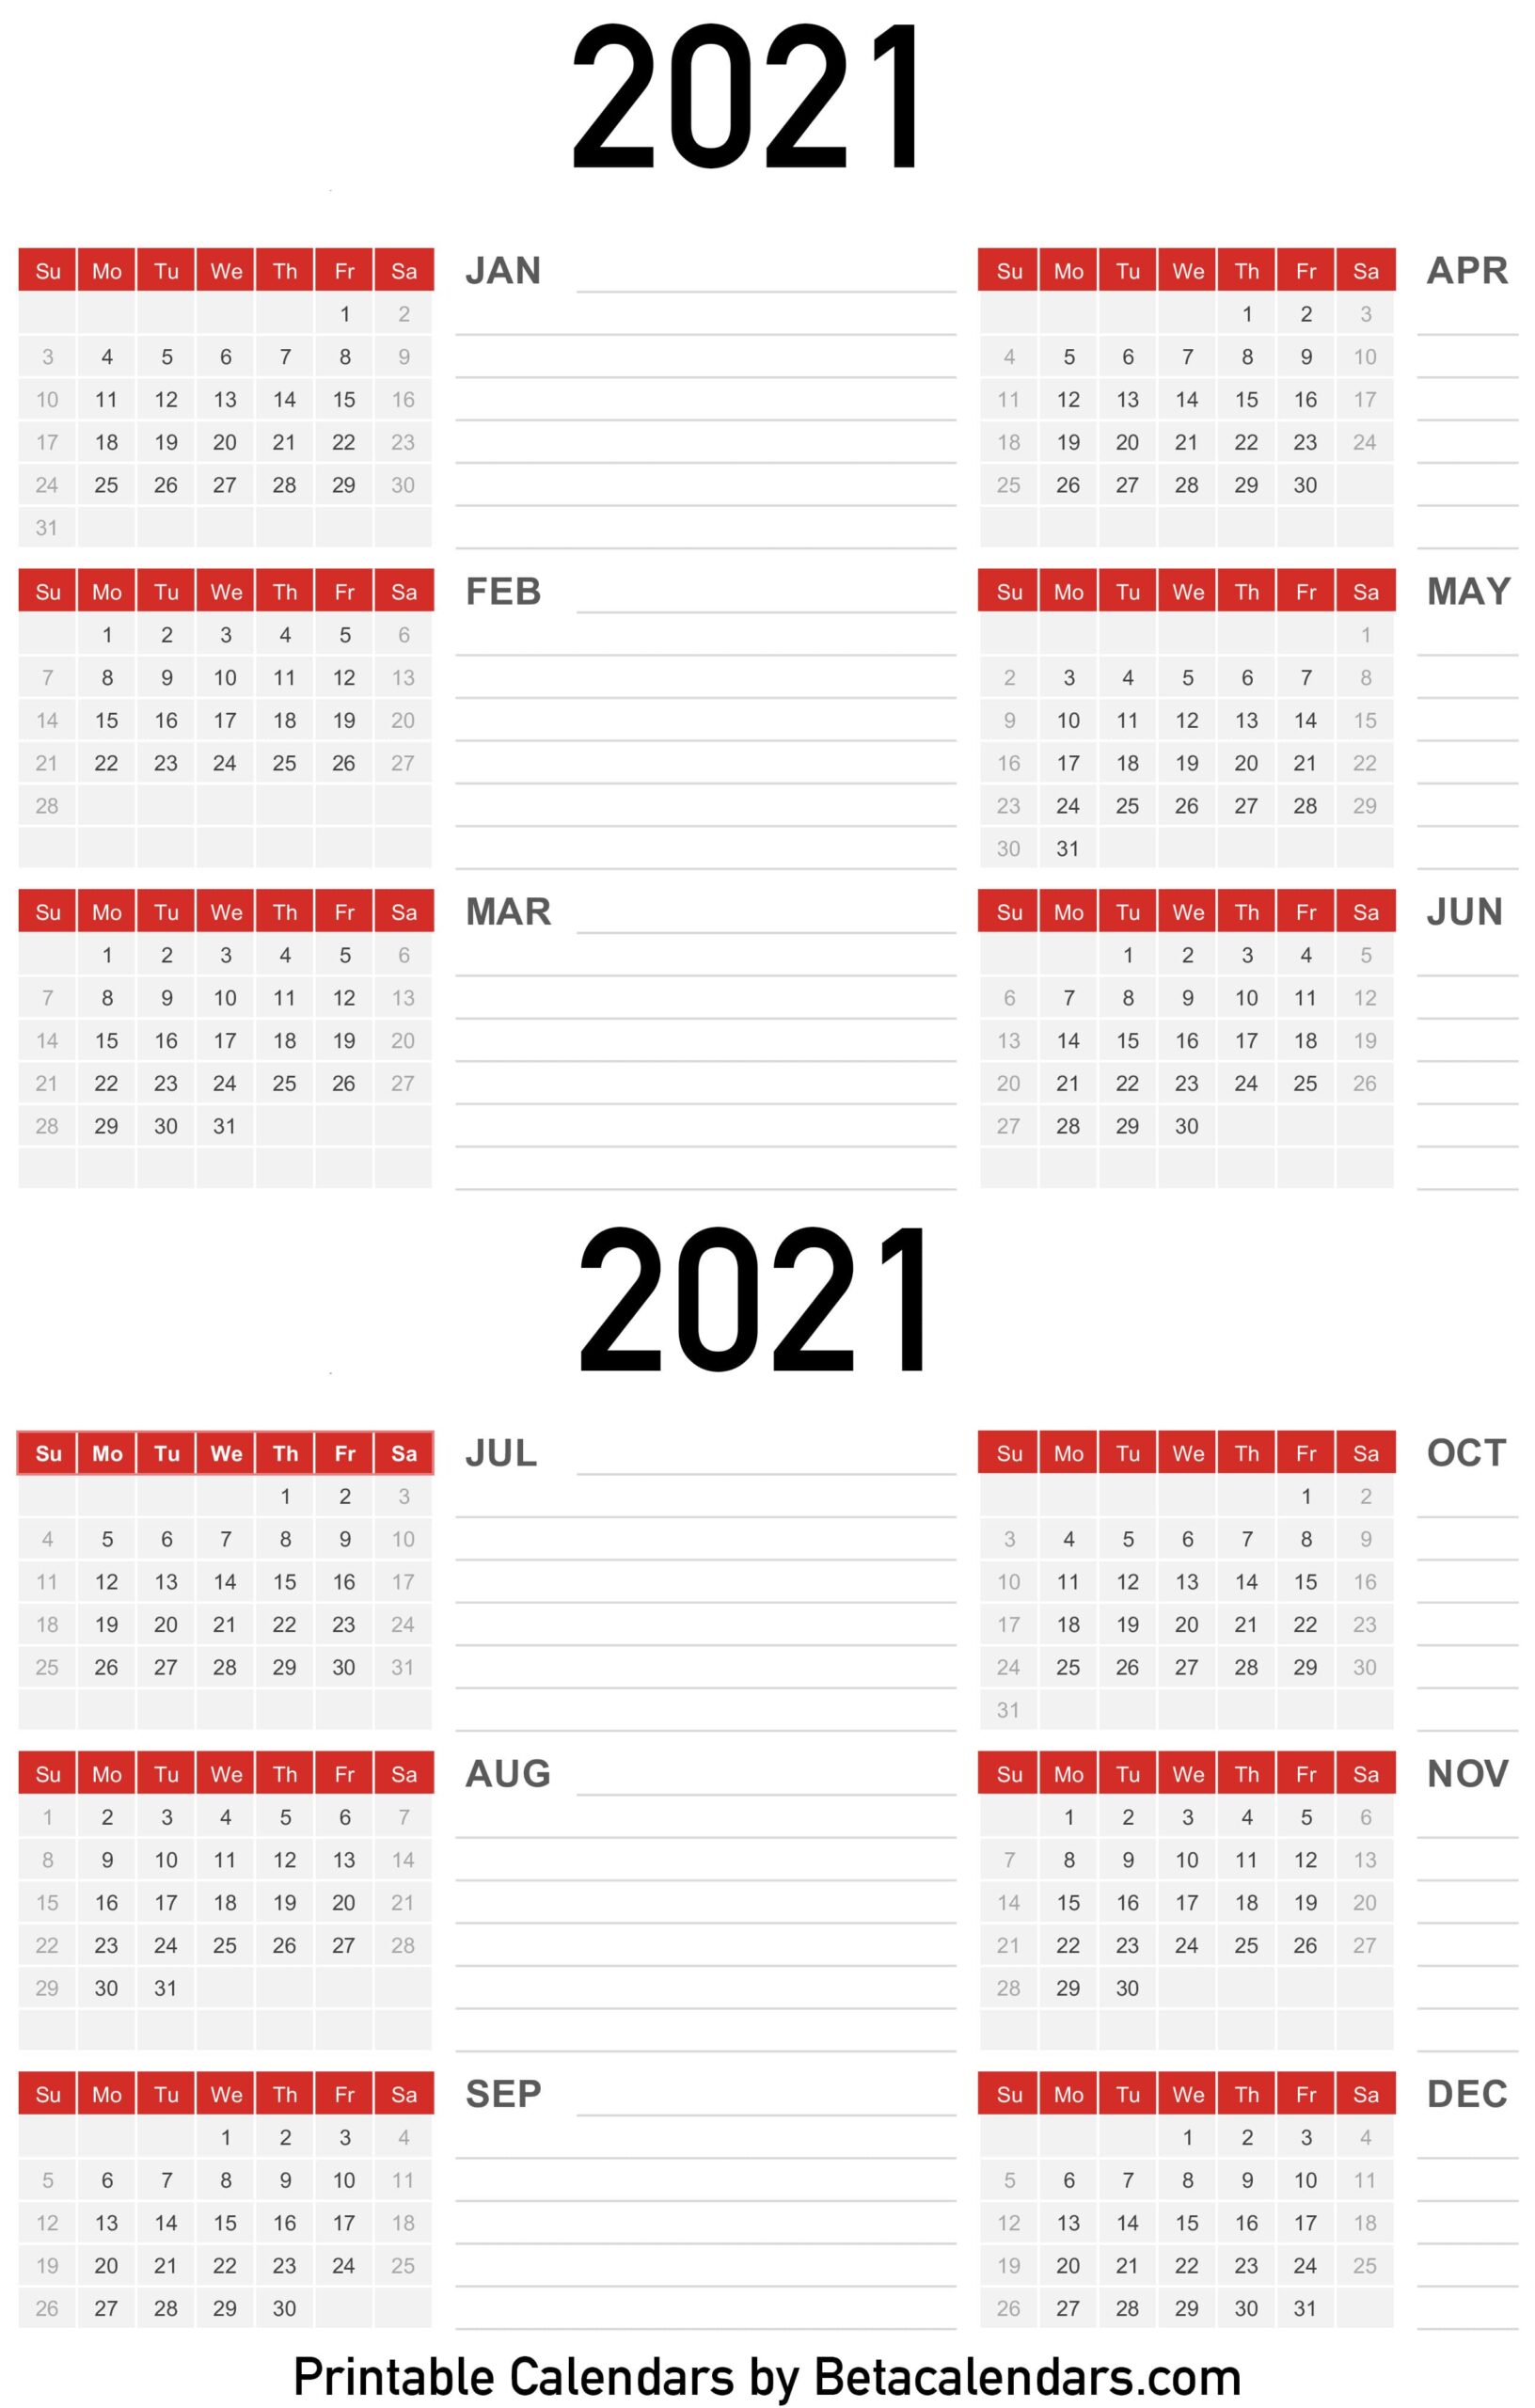 Calendar 2021 with notes